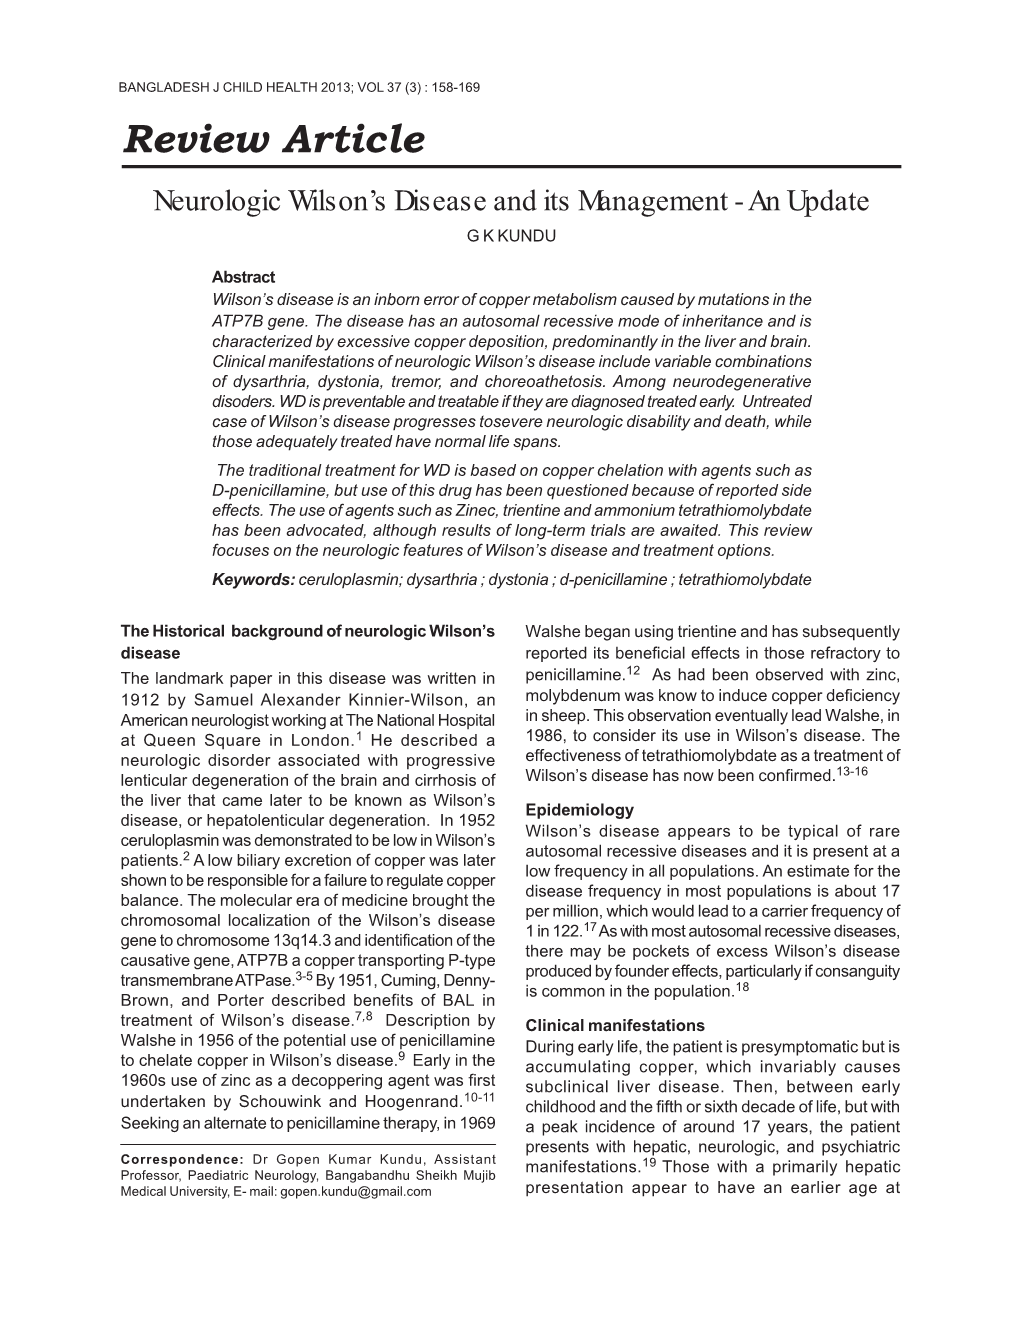 Review Article Neurologic Wilson’S Disease and Its Management - an Update G K KUNDU